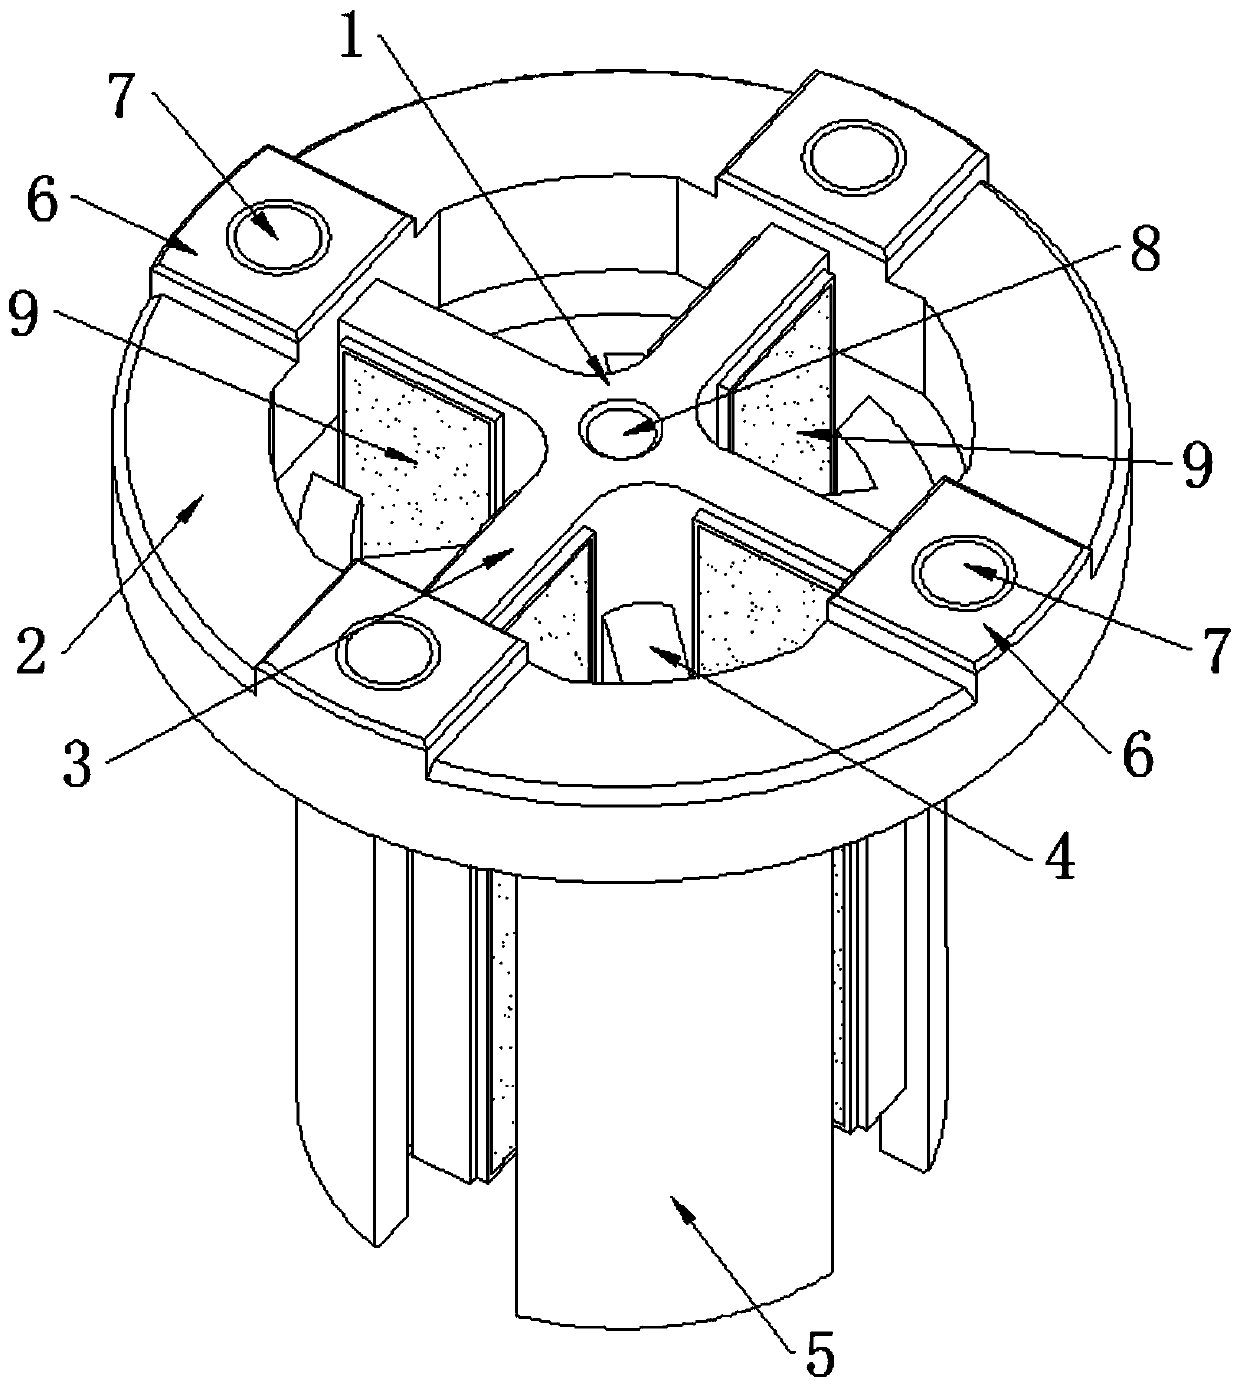 Harmonic oscillator structure of laser gyroscope